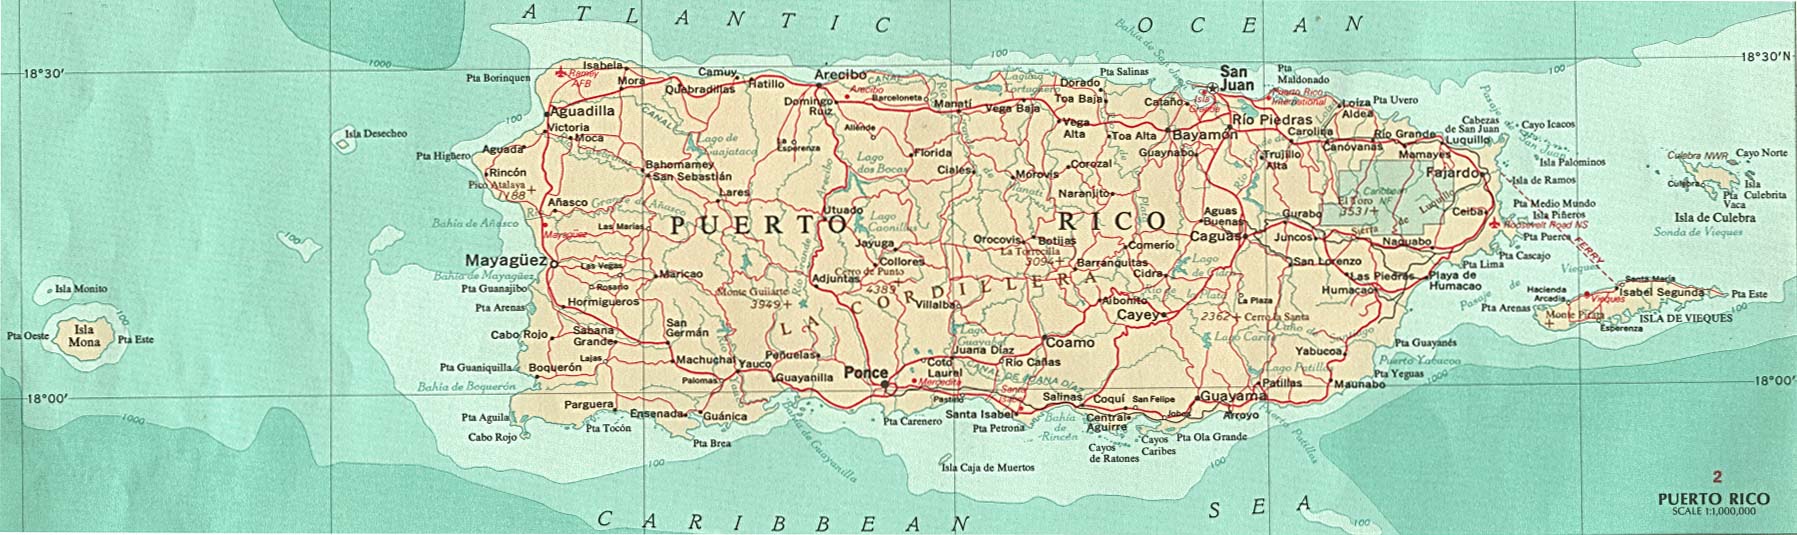 puerto rico karta Index of /images/texas maps/americas puerto rico karta